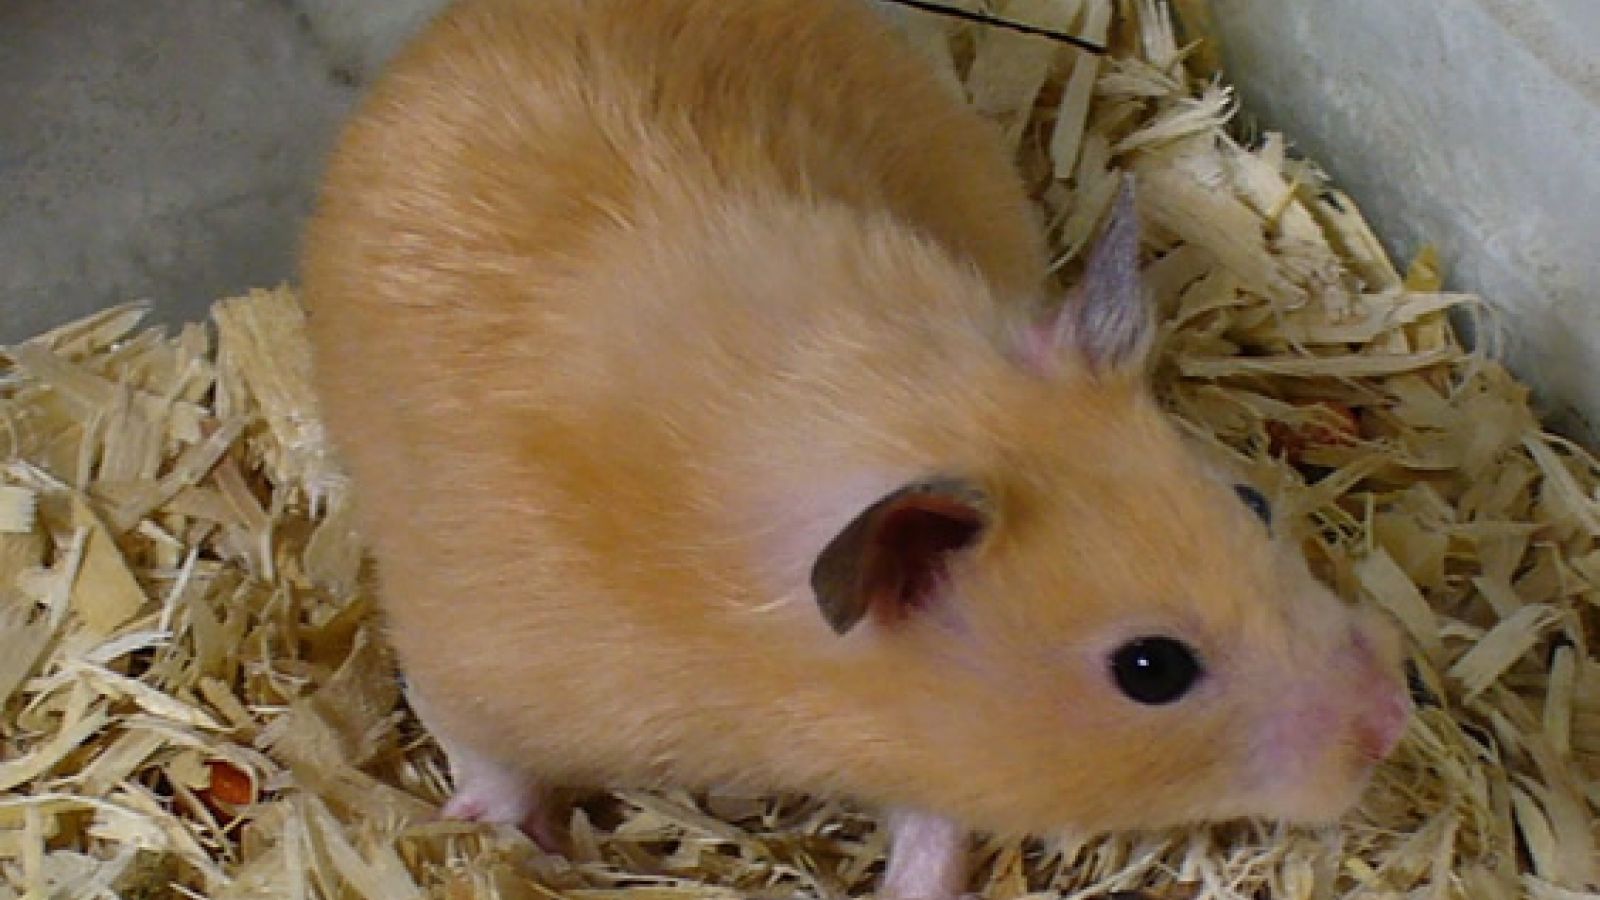 Syrian Hamster (Golden Hamster) Information